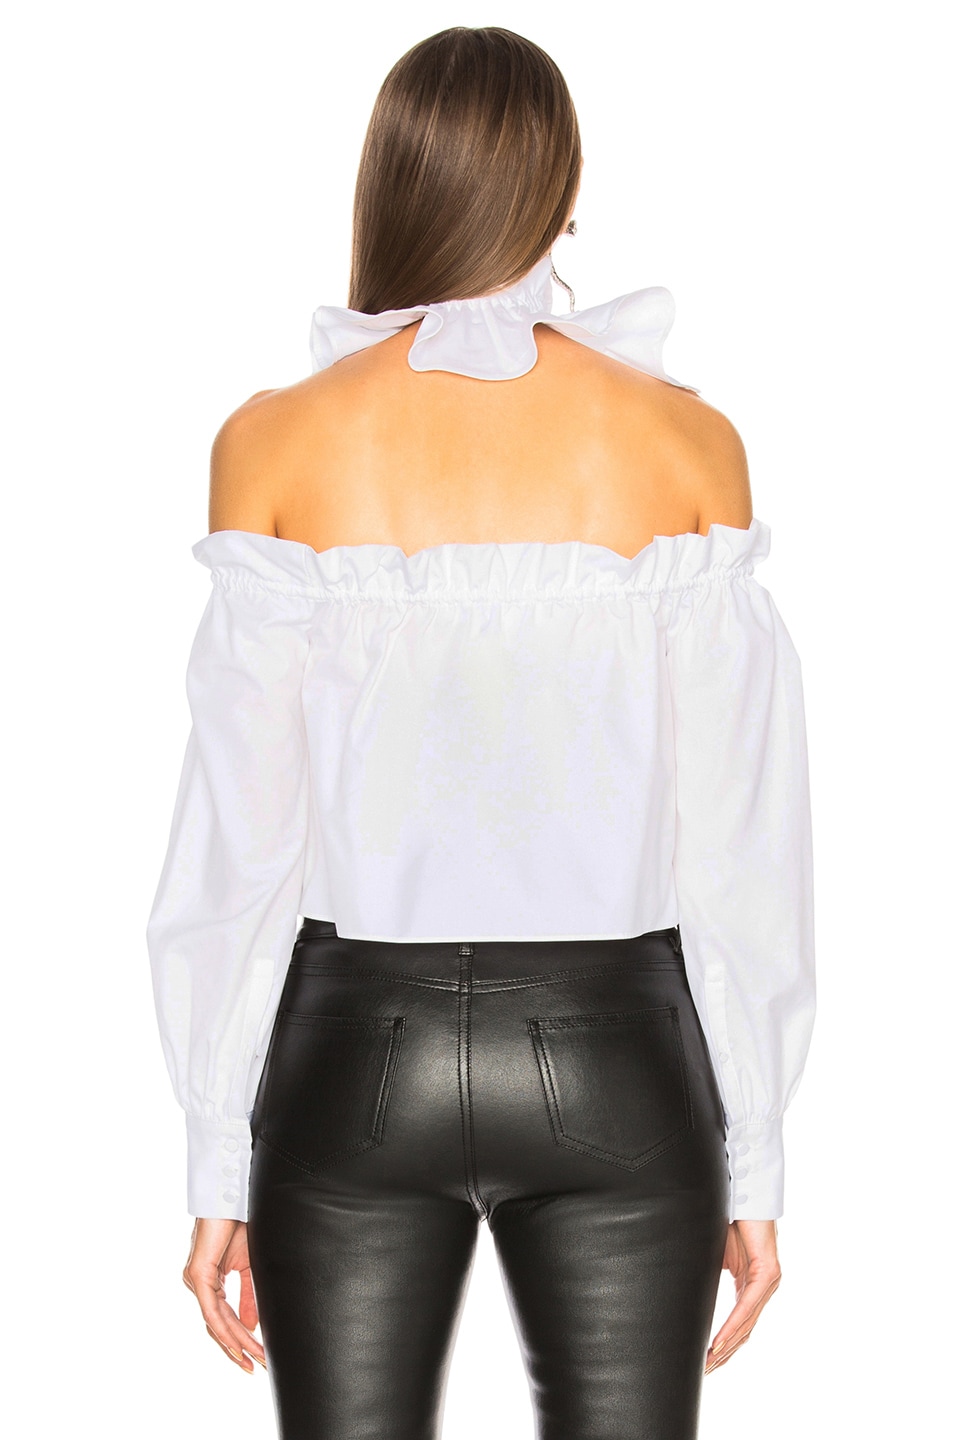 OFF-WHITE Gorget Shirt in White & Black | FWRD